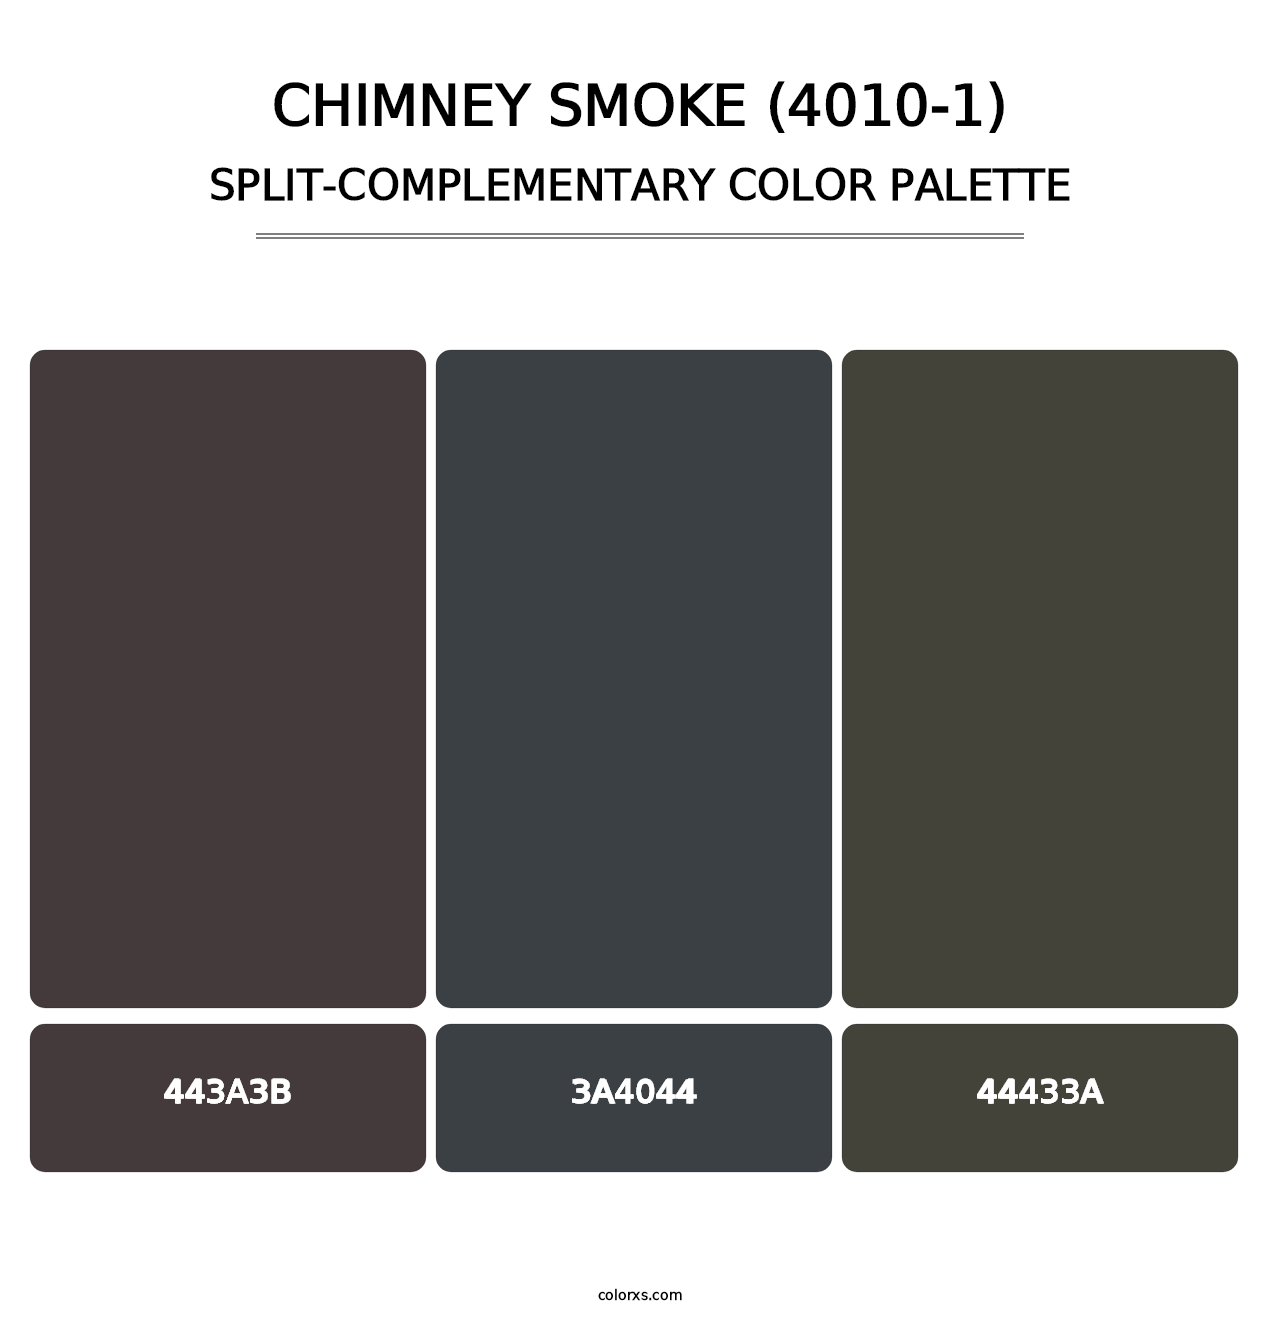 Chimney Smoke (4010-1) - Split-Complementary Color Palette